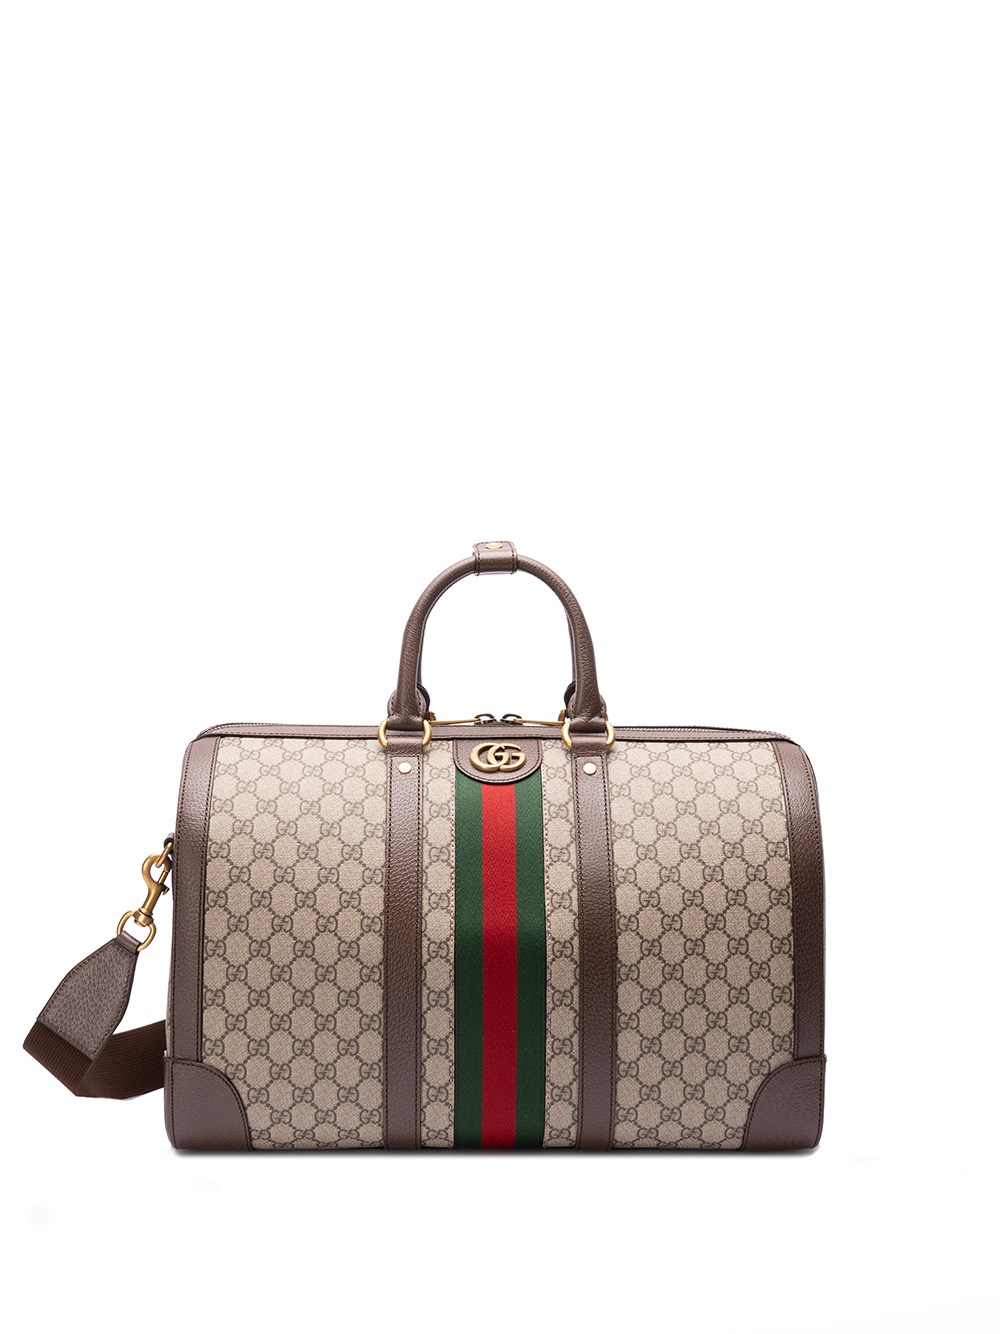 Gucci Duffle Bag In Brown